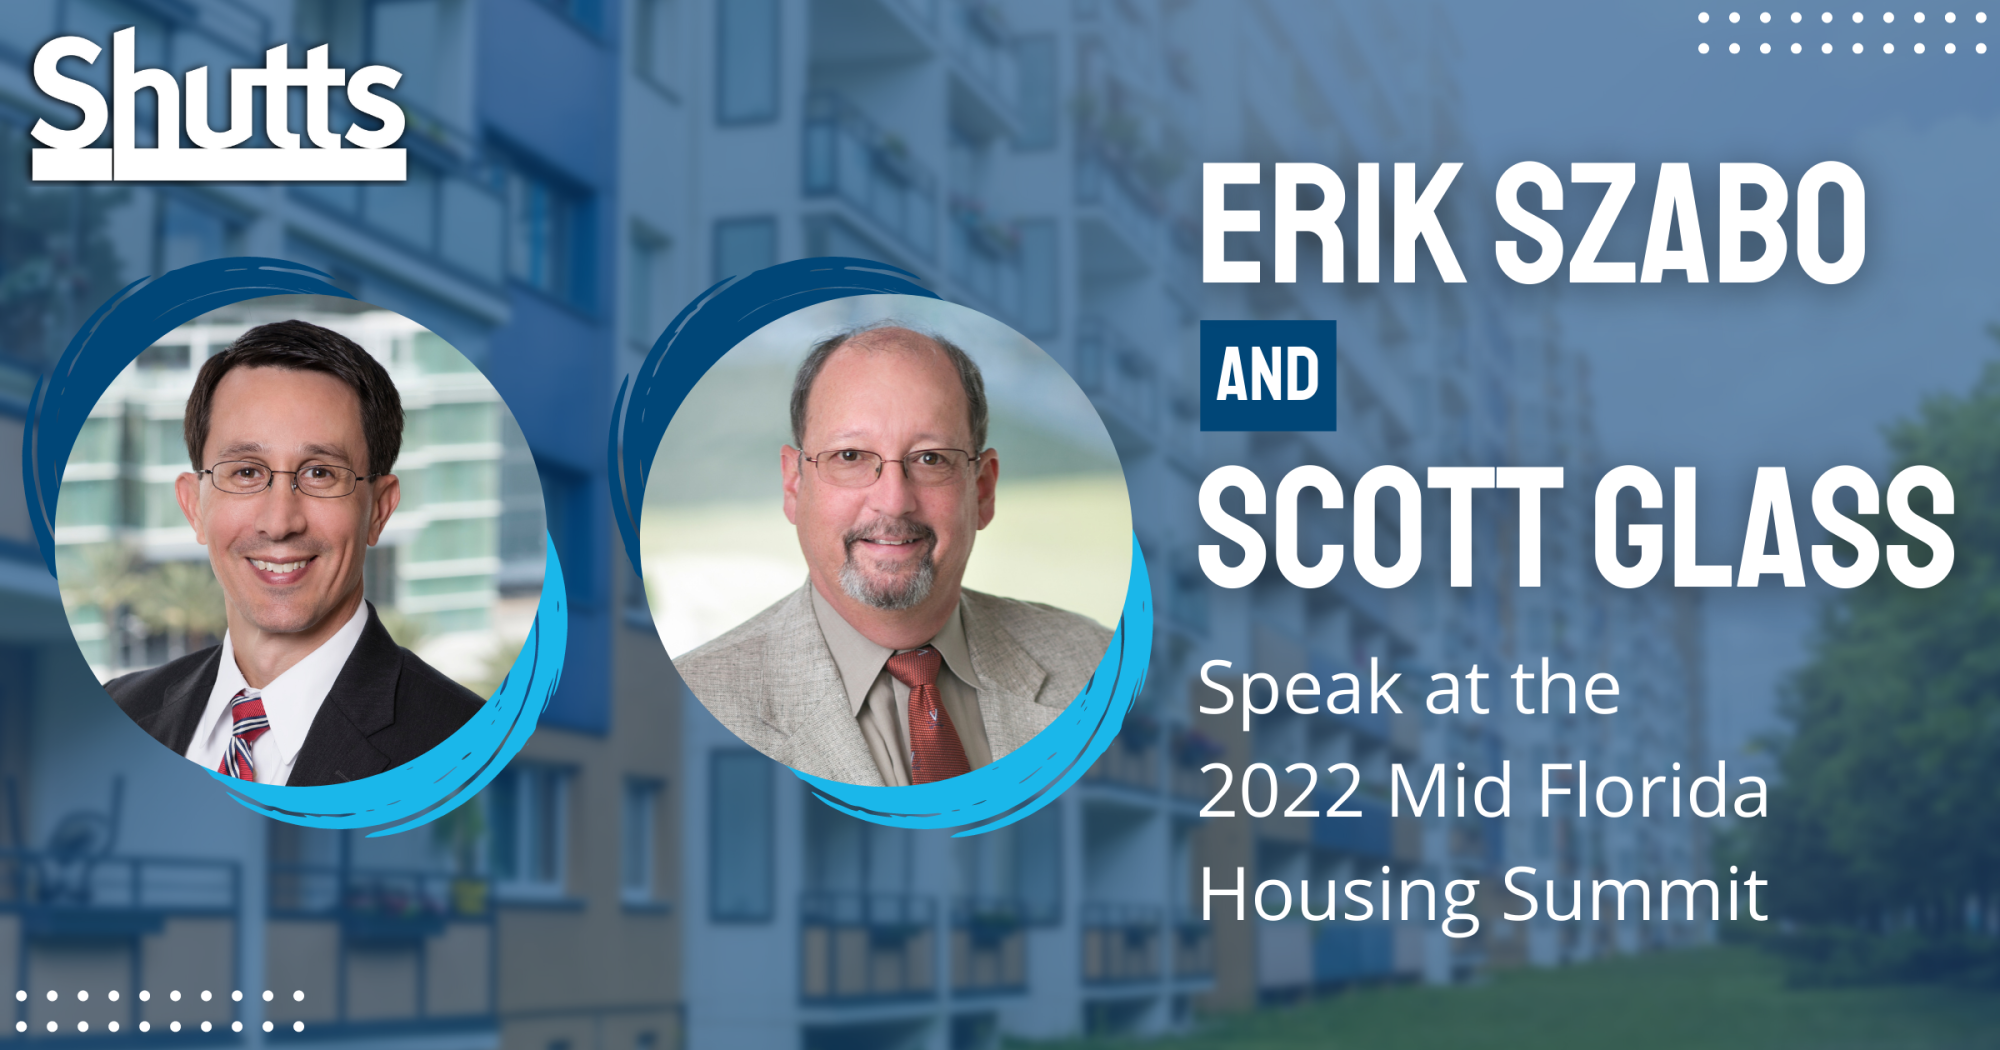 Erik Szabo and Scott Glass Speak at the 2022 Mid Florida Housing Summit